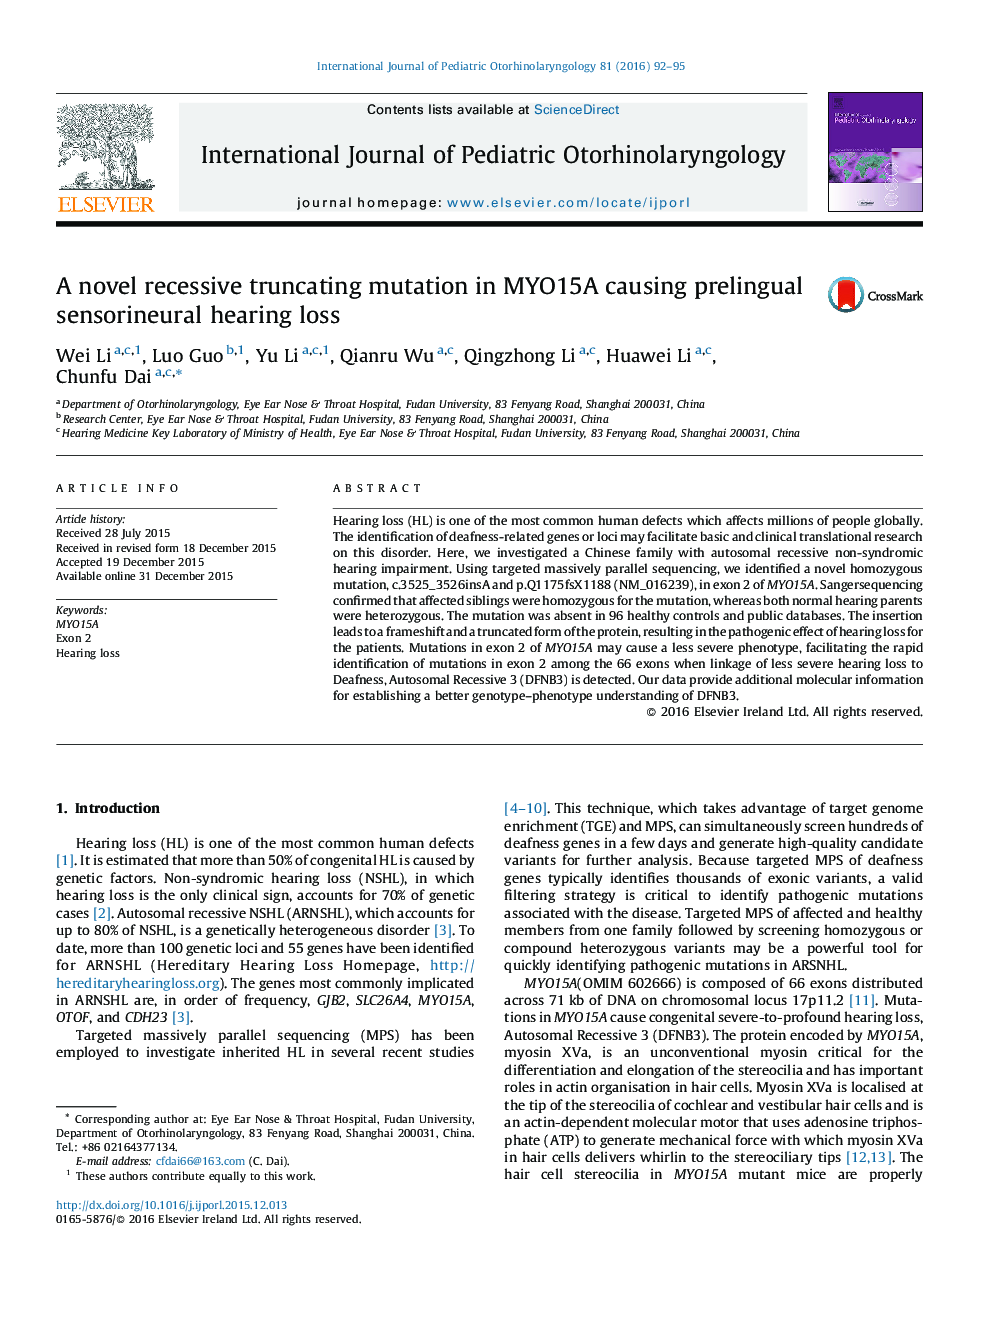 A novel recessive truncating mutation in MYO15A causing prelingual sensorineural hearing loss